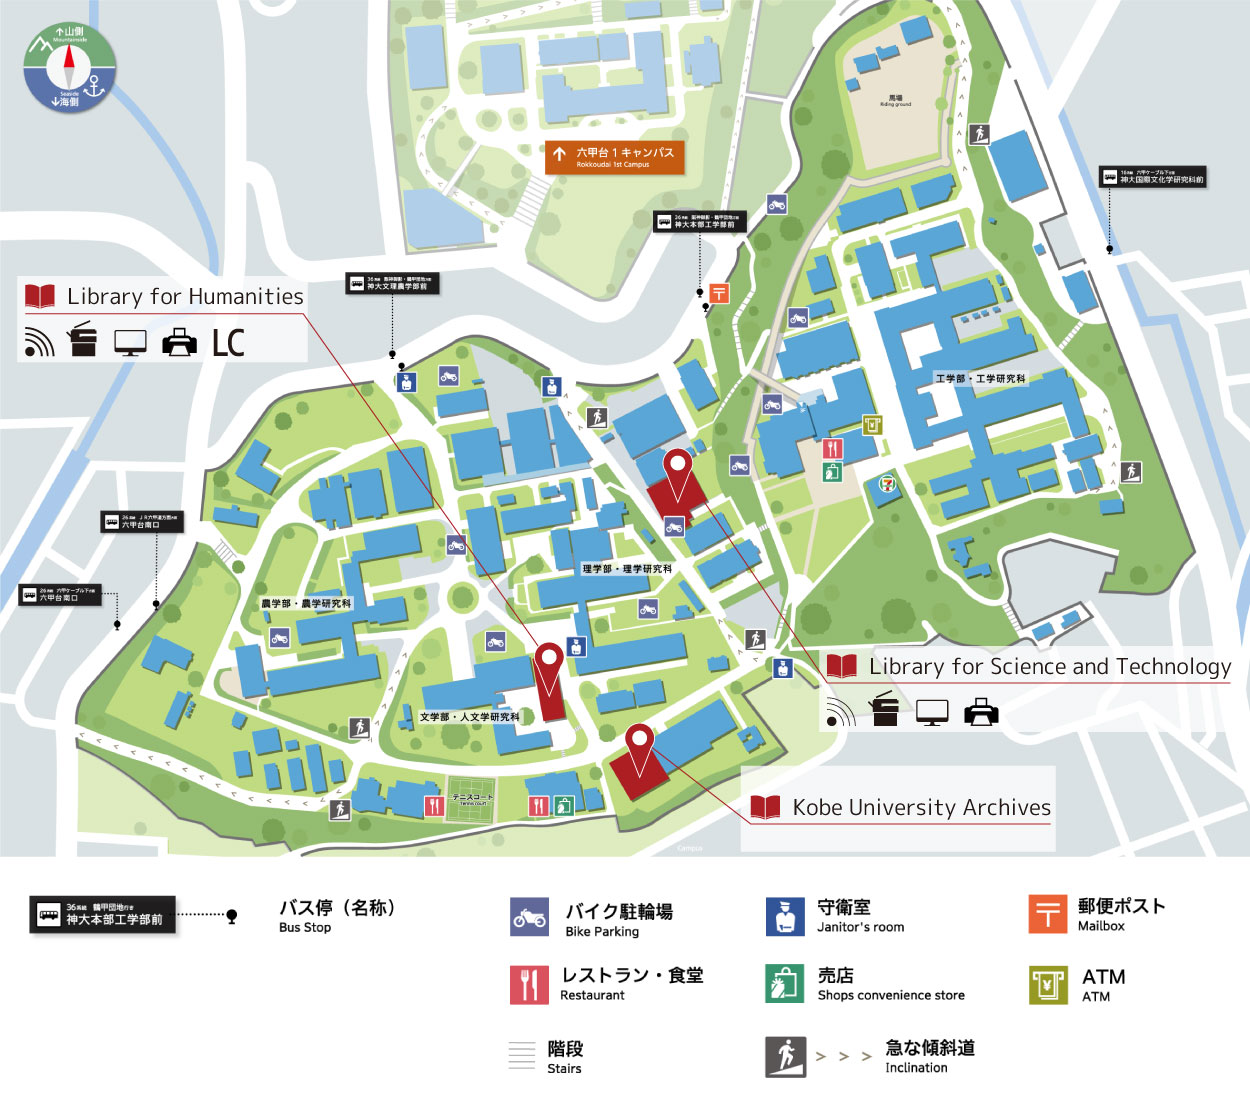 map of rokkodai 1st campus